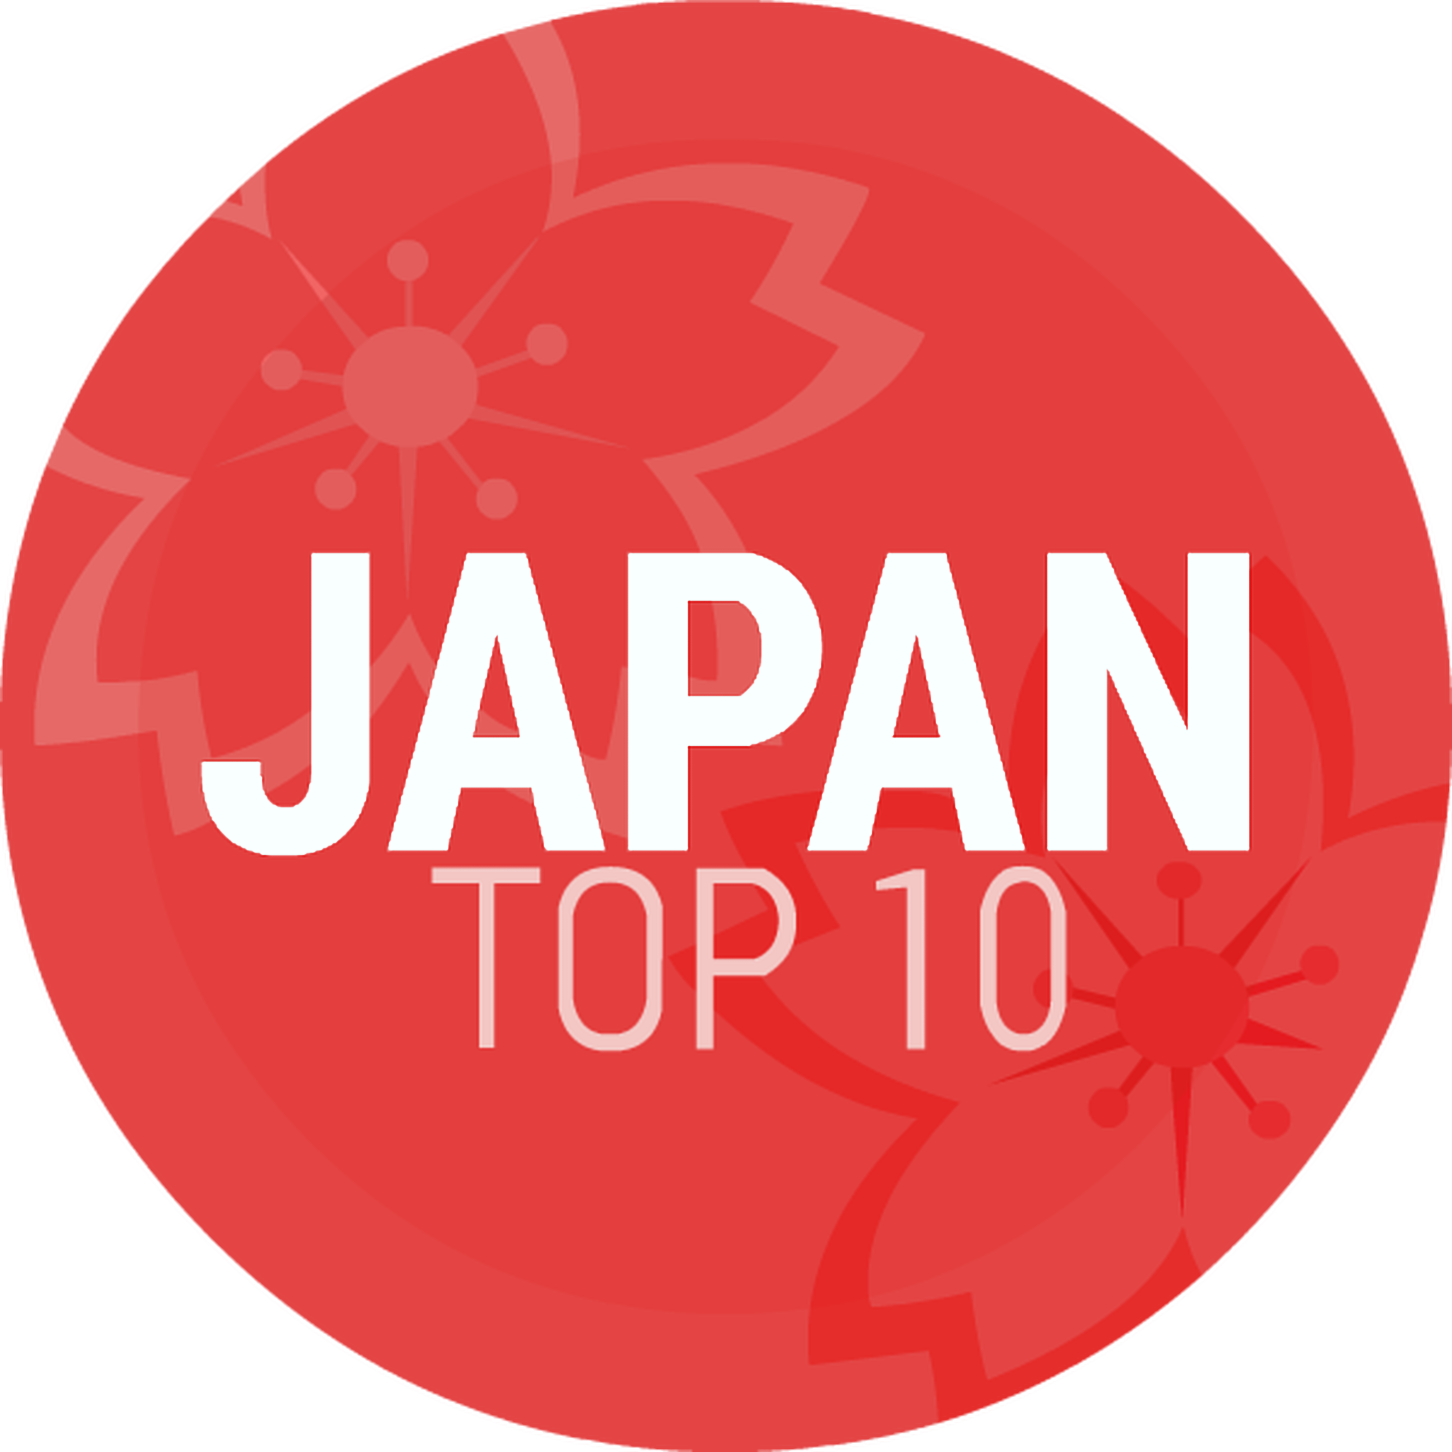 Episode 318: Japan Top 10 April 2020 Countdown 